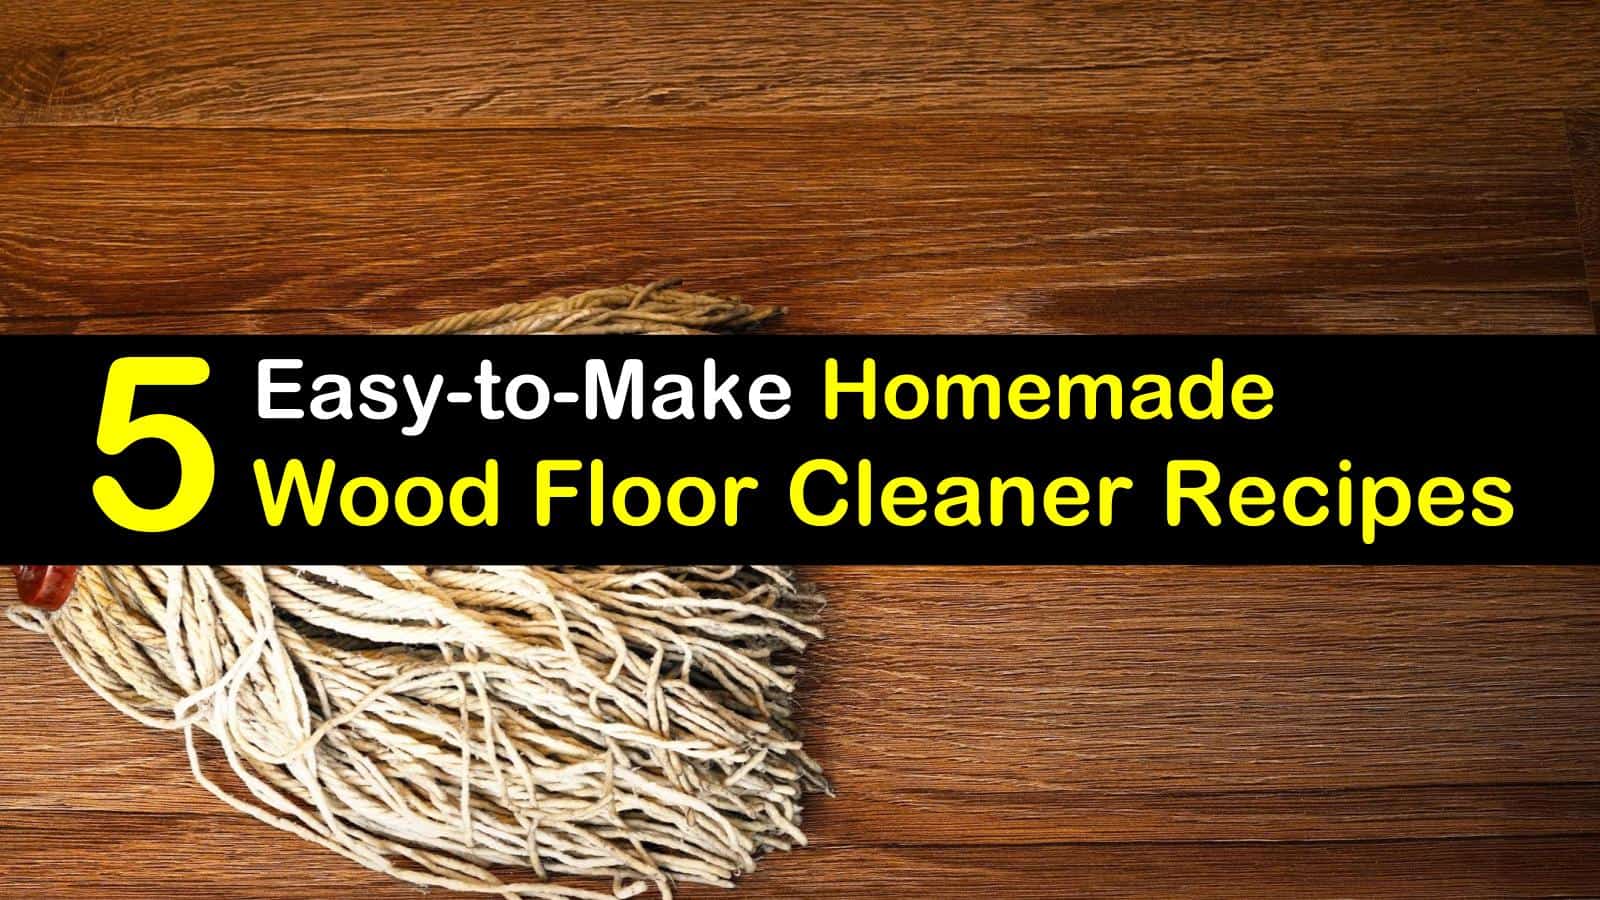 Homemade Wood Floor Cleaner Recipes, Homemade Hardwood Floor Cleaner